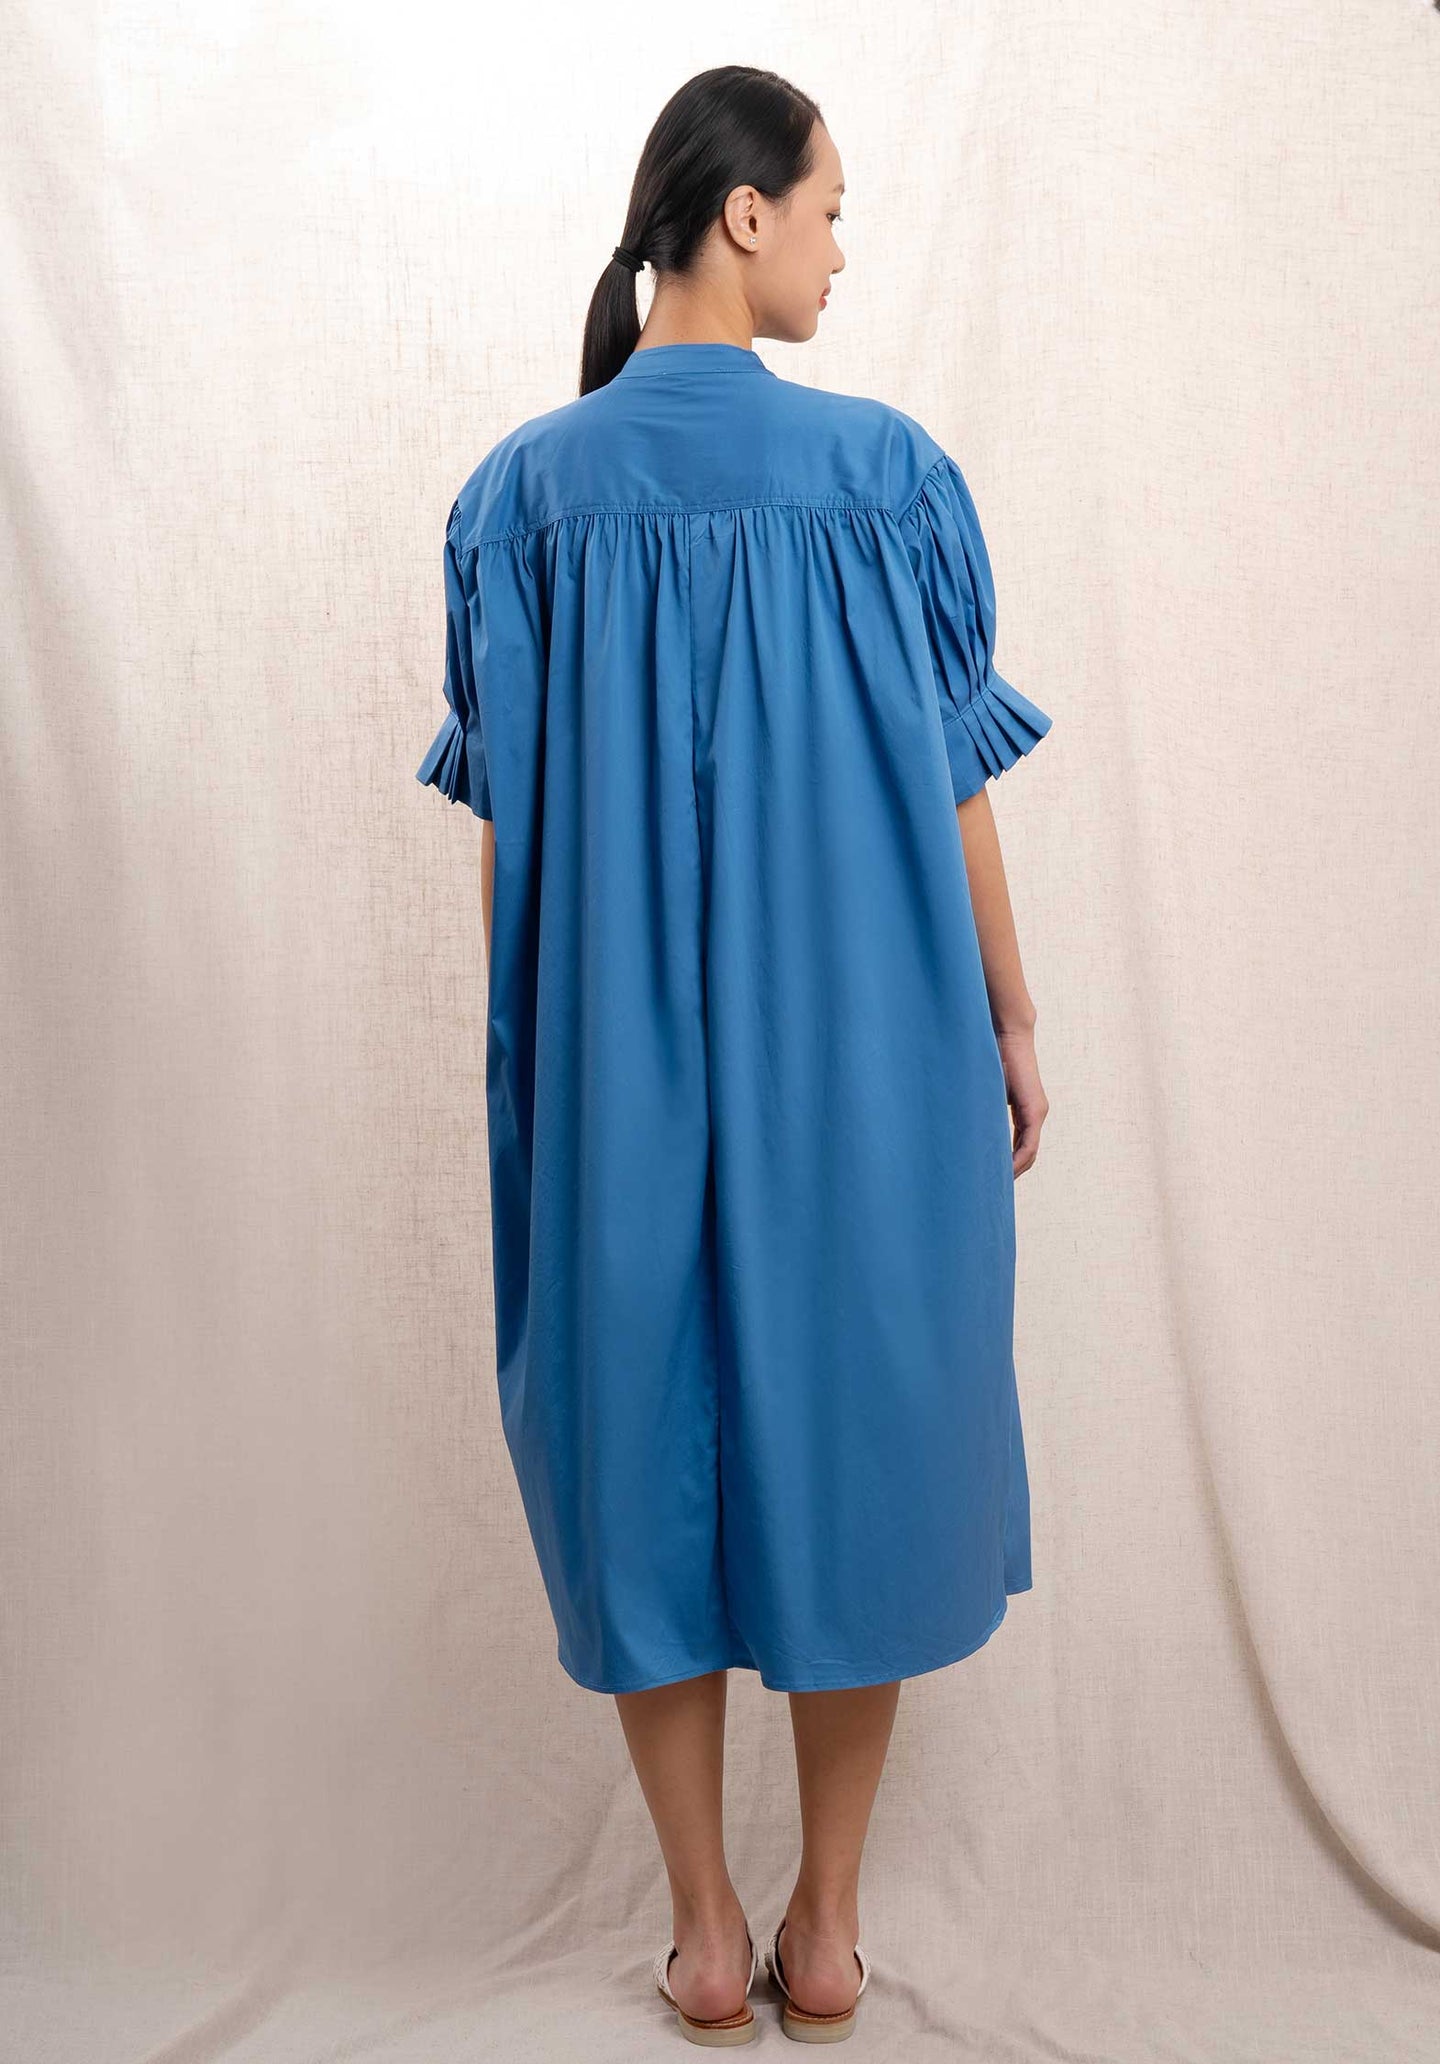 Dress Kc848 Bleu-Royal